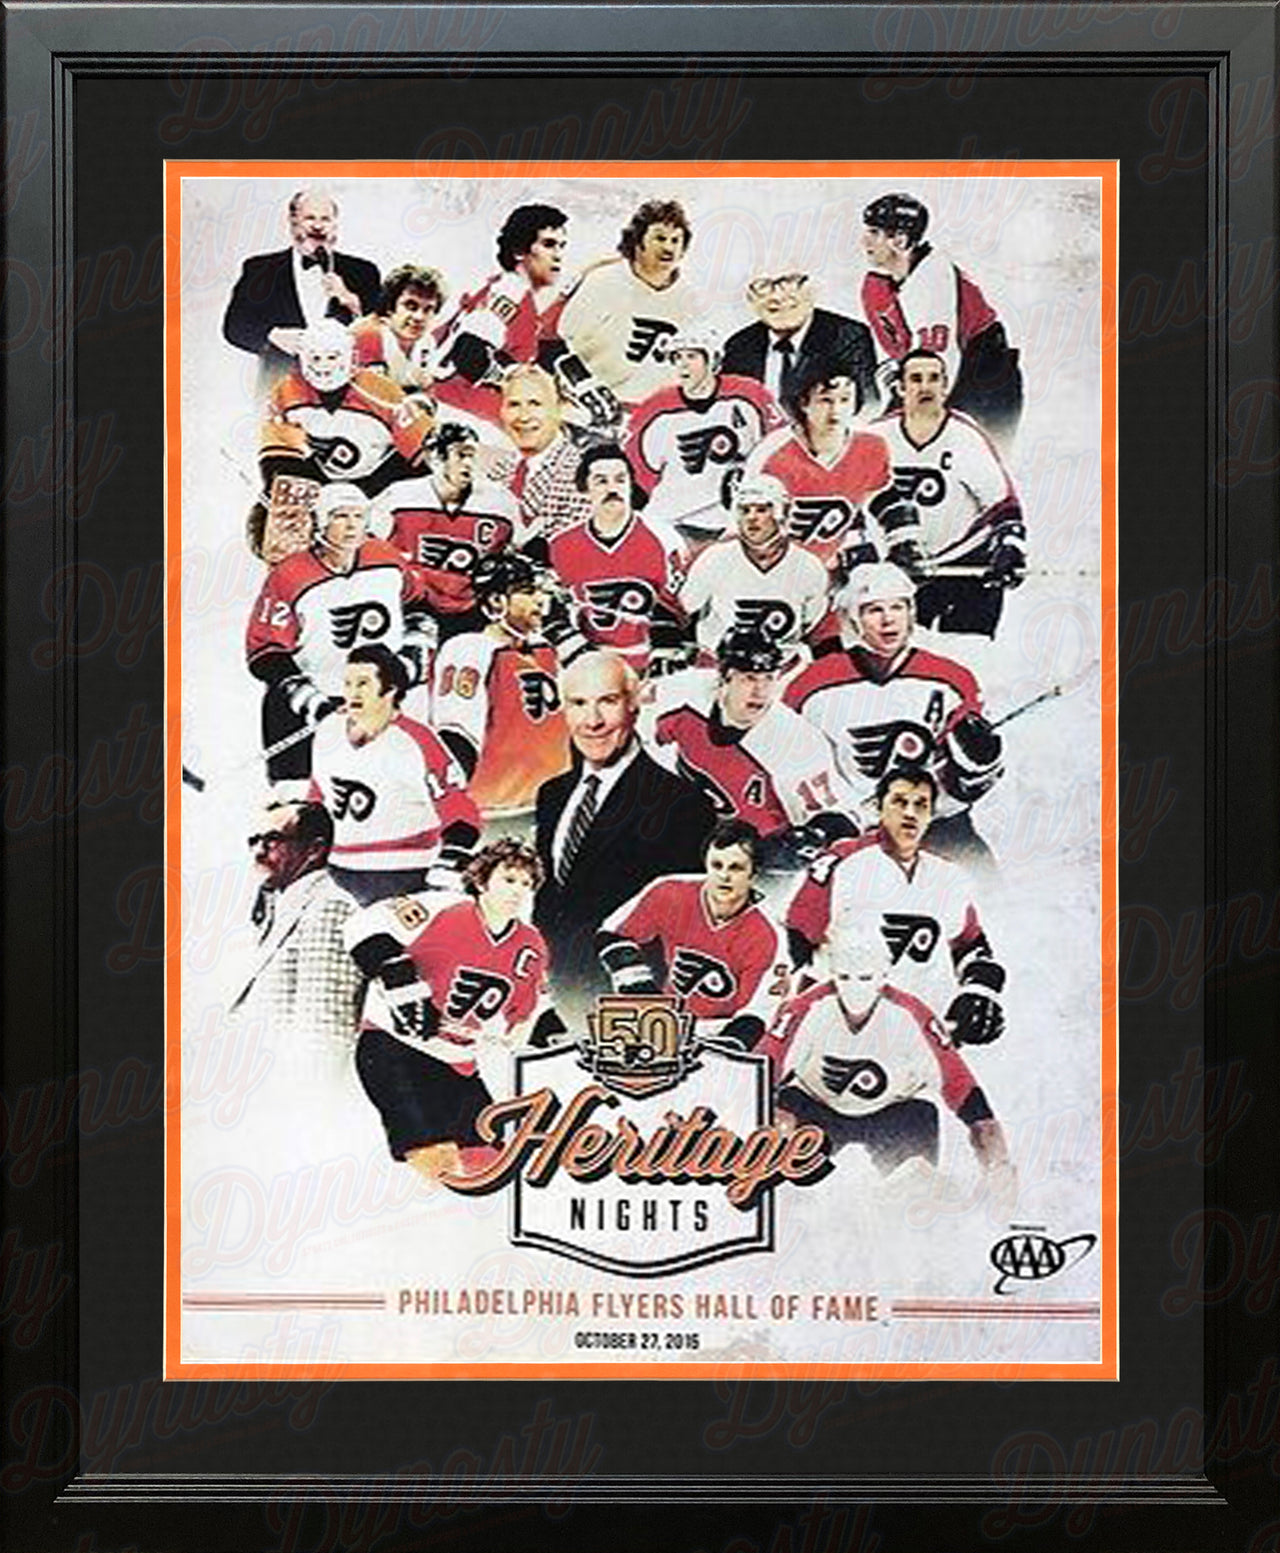 Philadelphia Flyers 50th Anniversary Heritage Nights Limited Edition Framed NHL Hockey Team Poster - Dynasty Sports & Framing 